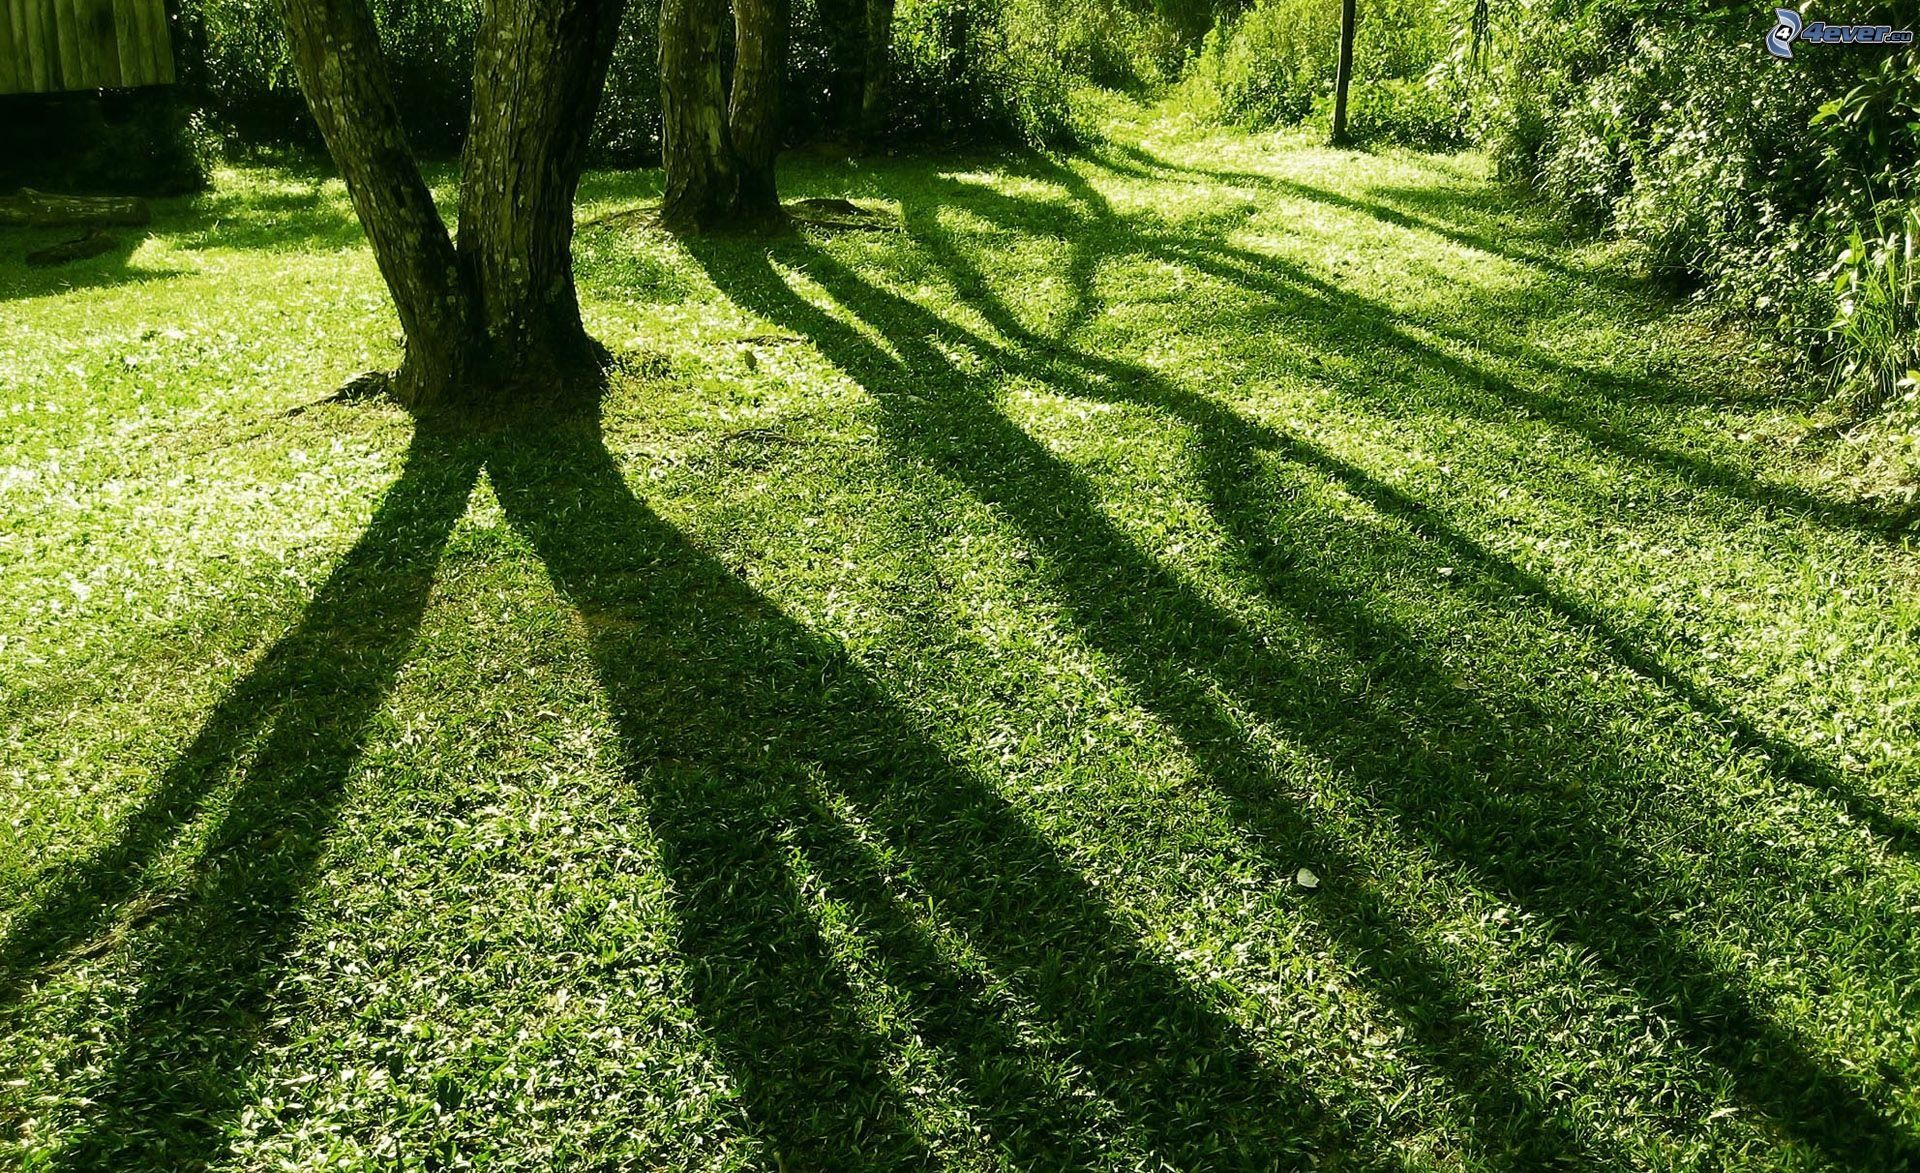 Tree shadow